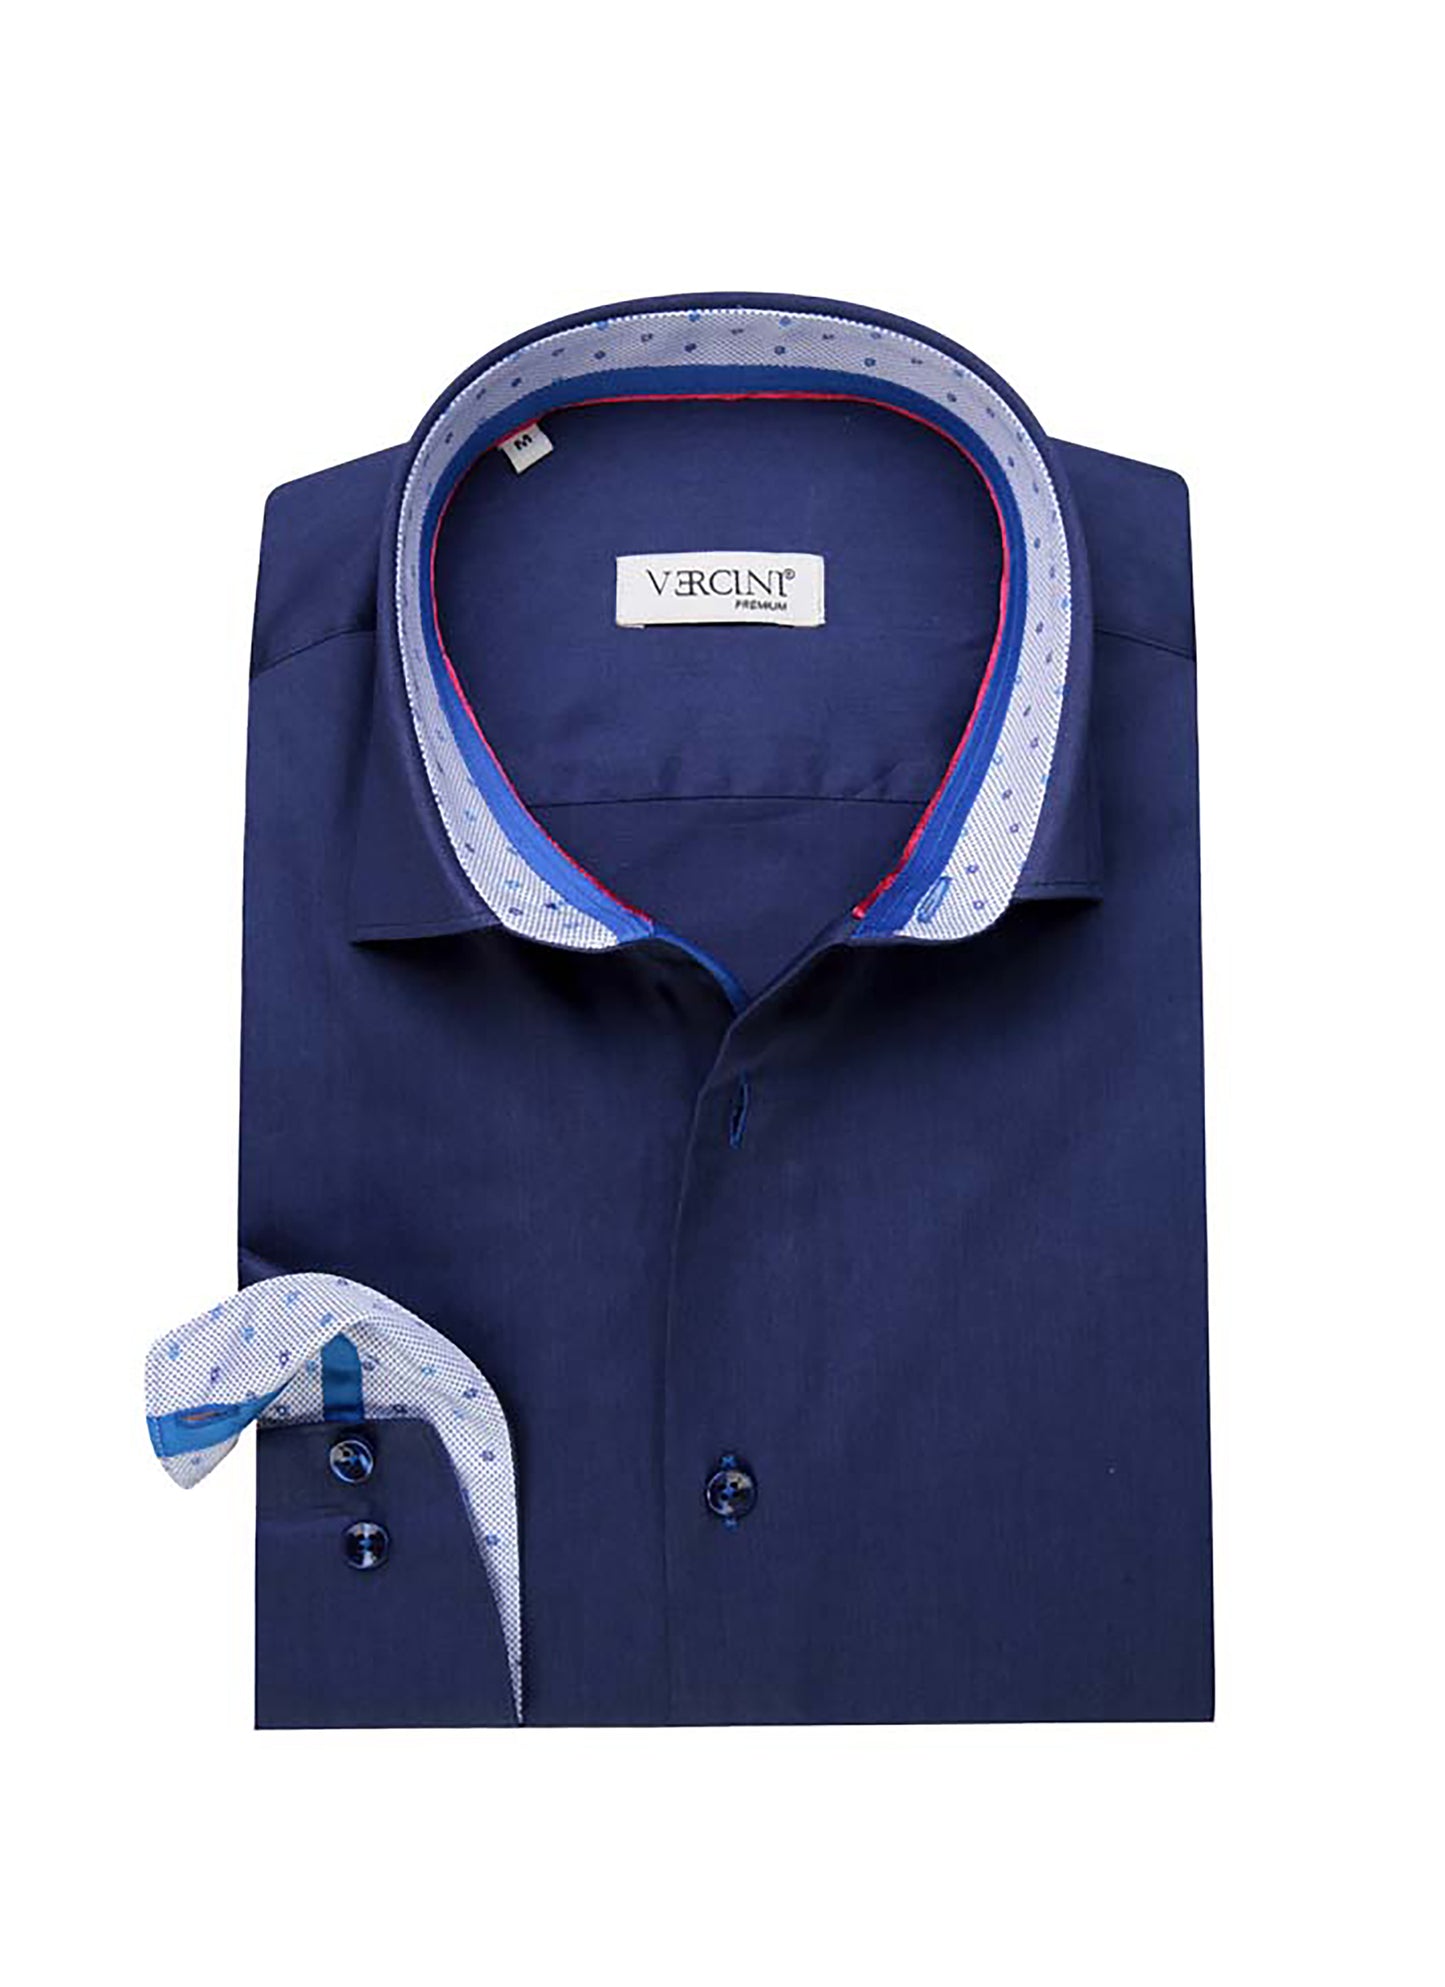 NAVY BLUE VERCINI SHIRT VERCINI COLLAR SHIRTS Casual Shirts Vercini